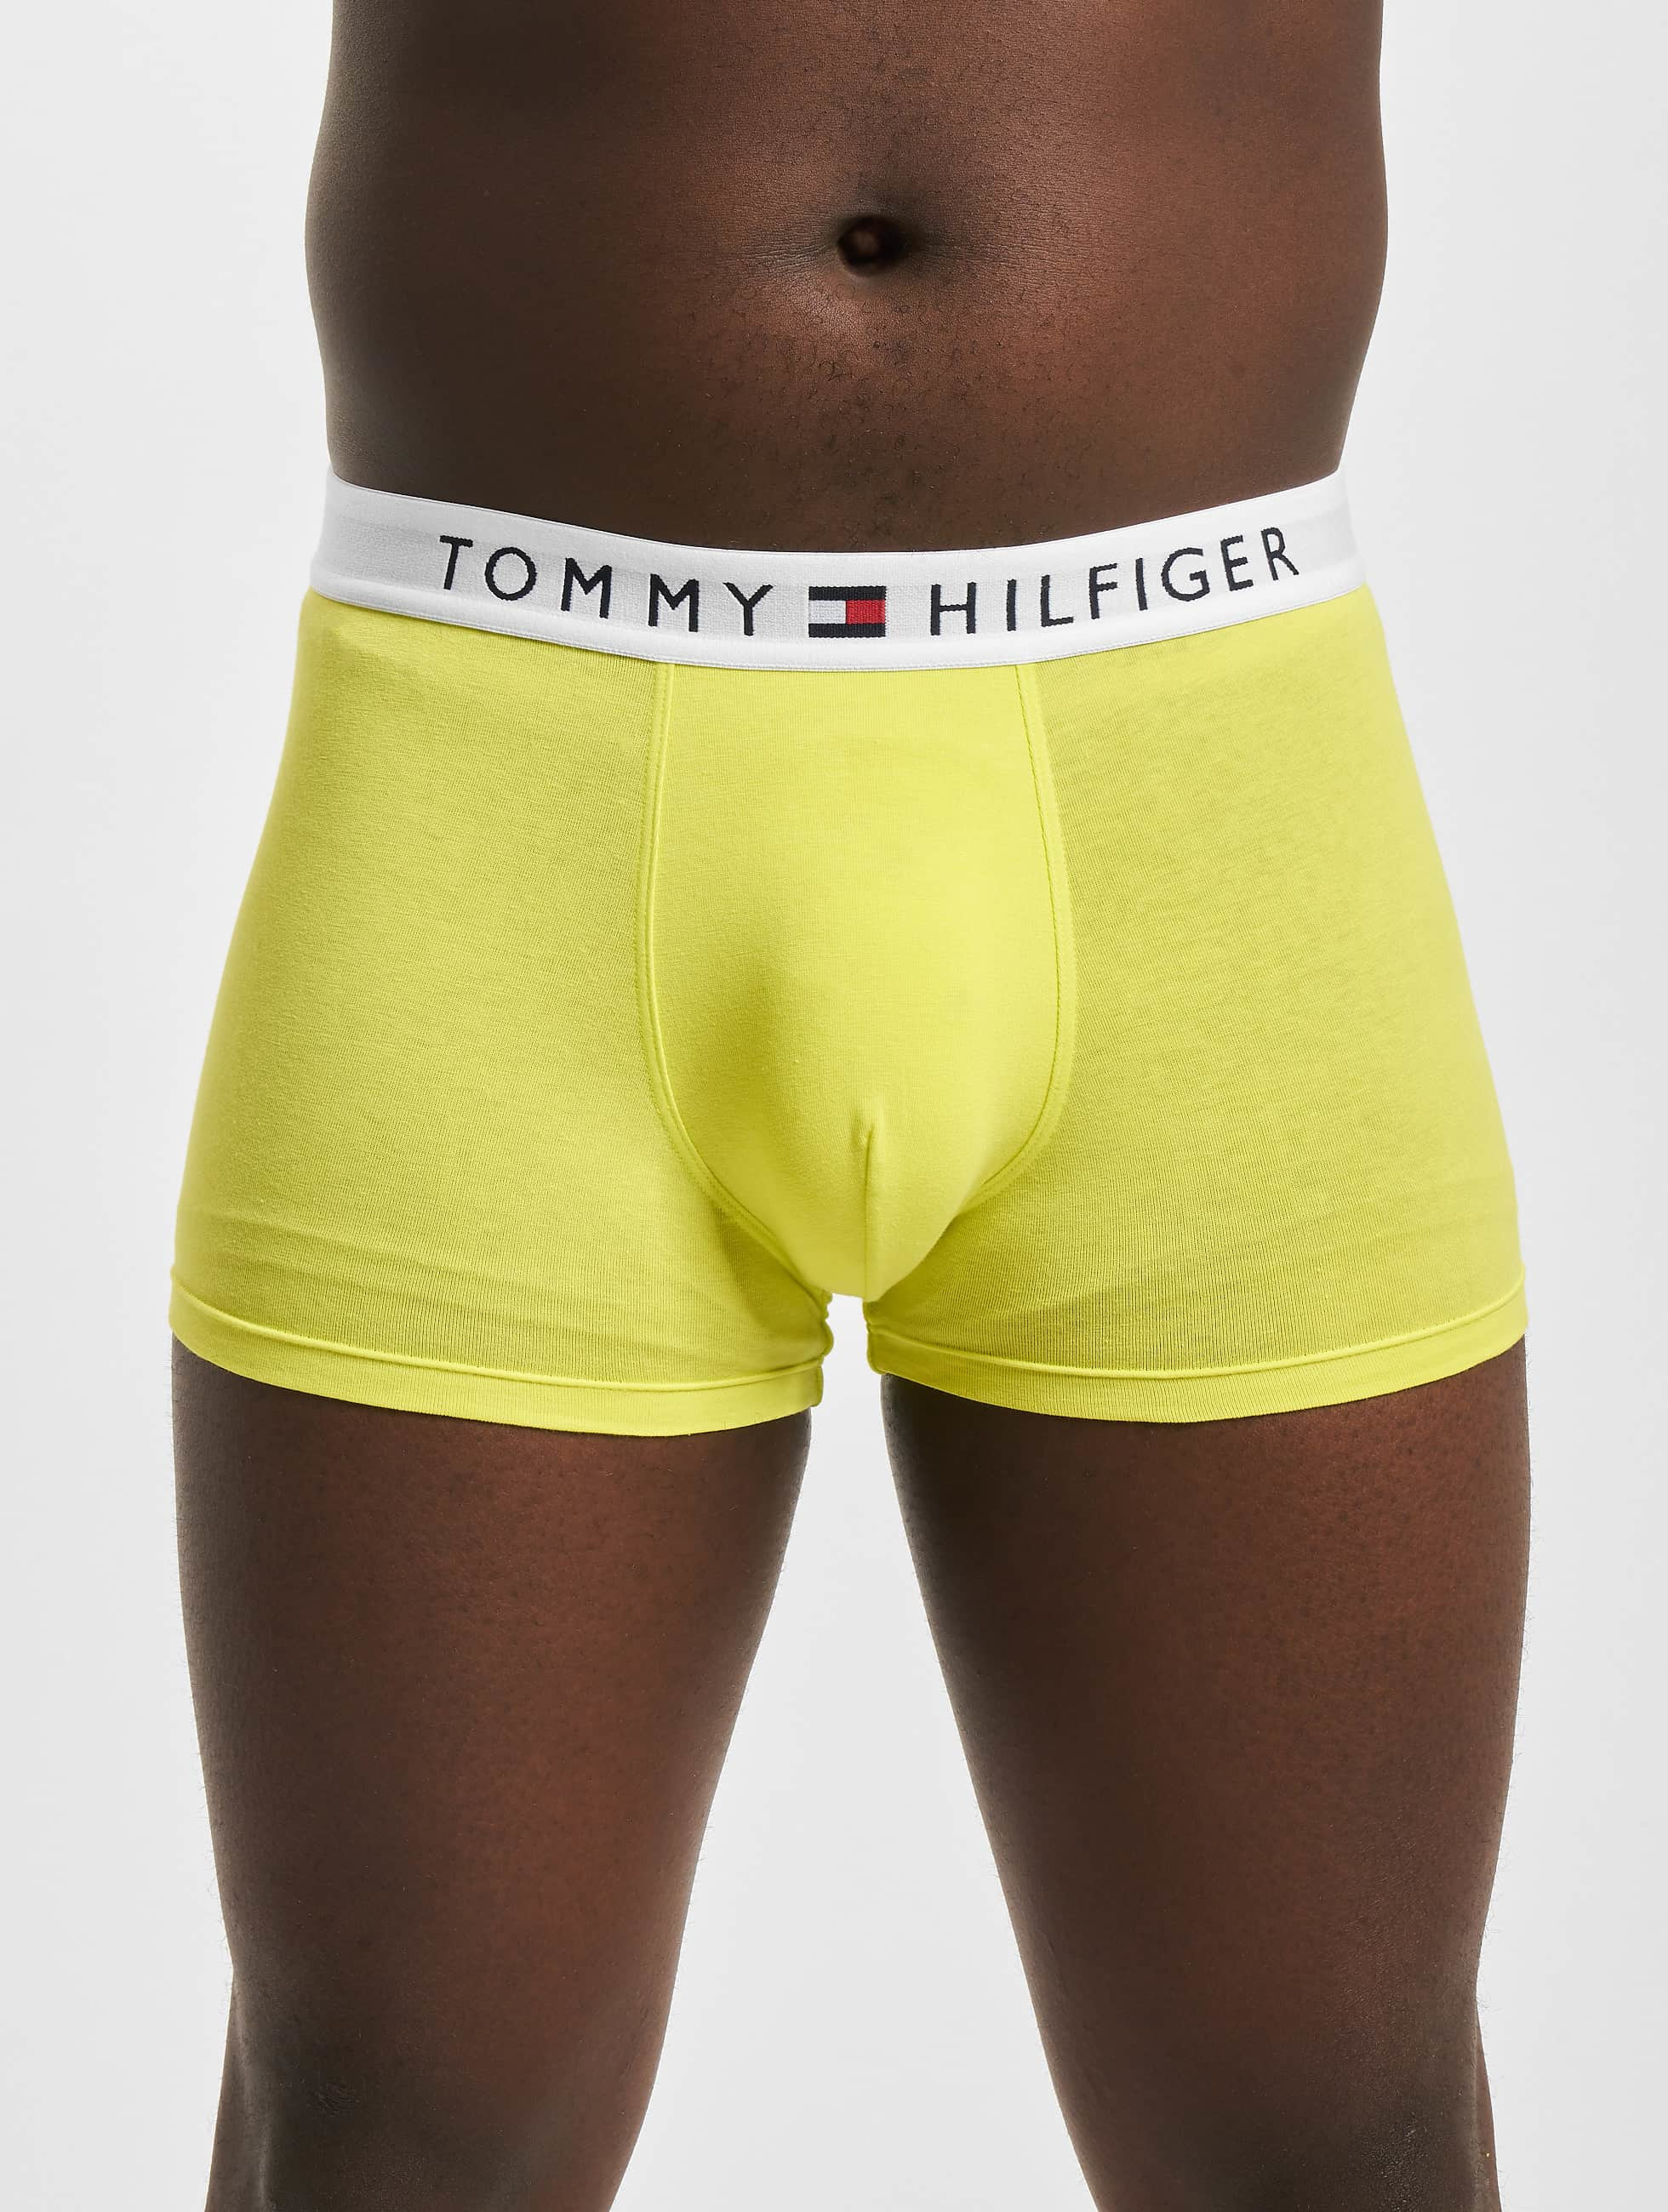 unlock har en finger i kagen rotation Tommy Hilfiger Undertøj / Badetøj / Undertøj Underwear Trunk i gul 977098